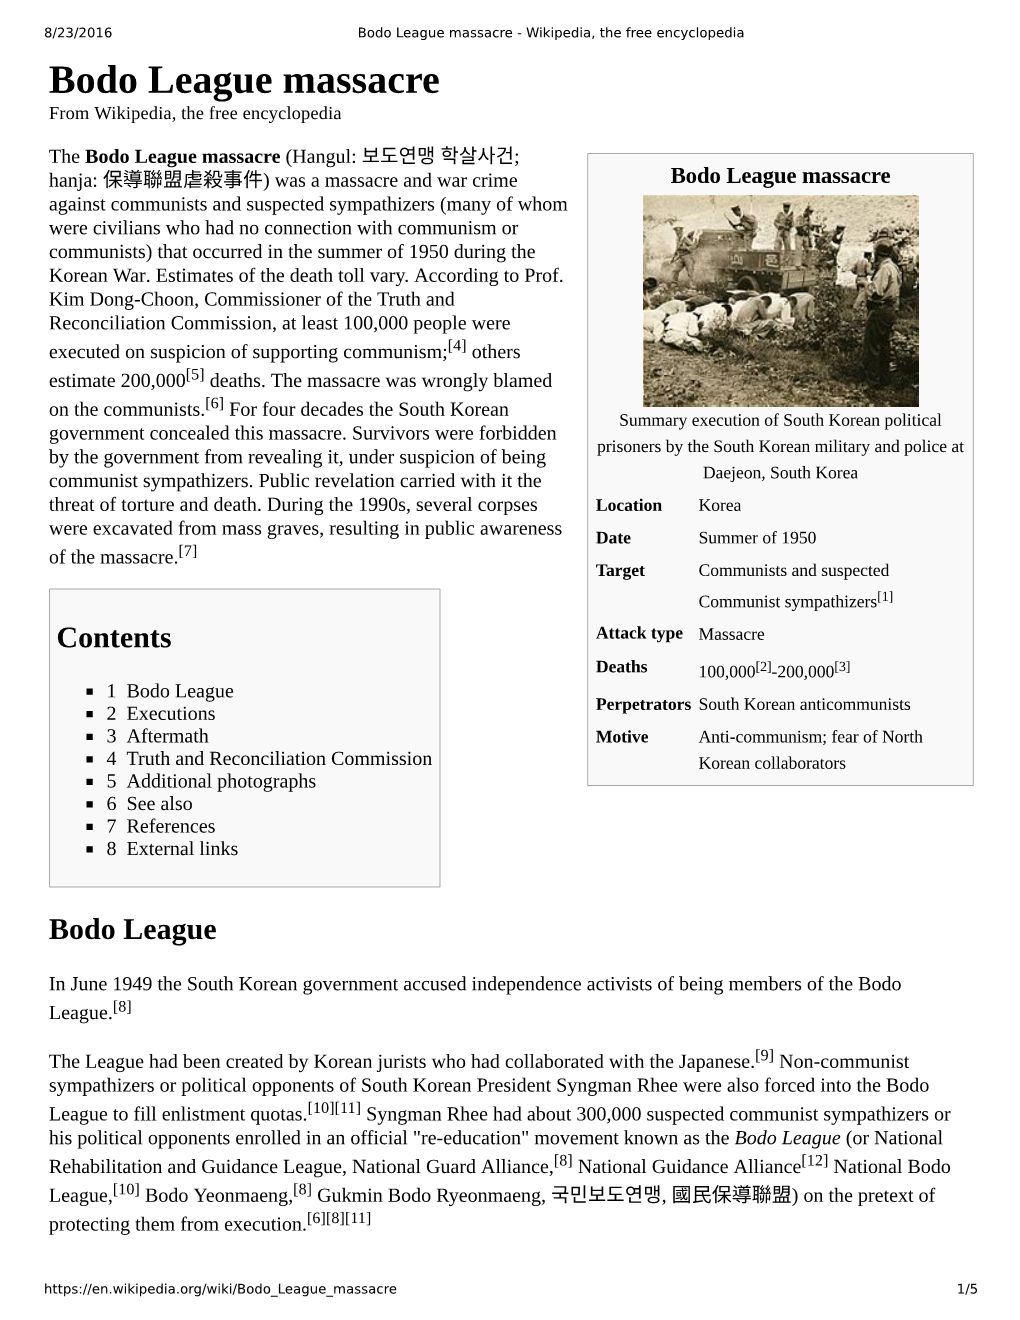 Bodo League Massacre - Wikipedia, the Free Encyclopedia Bodo League Massacre from Wikipedia, the Free Encyclopedia